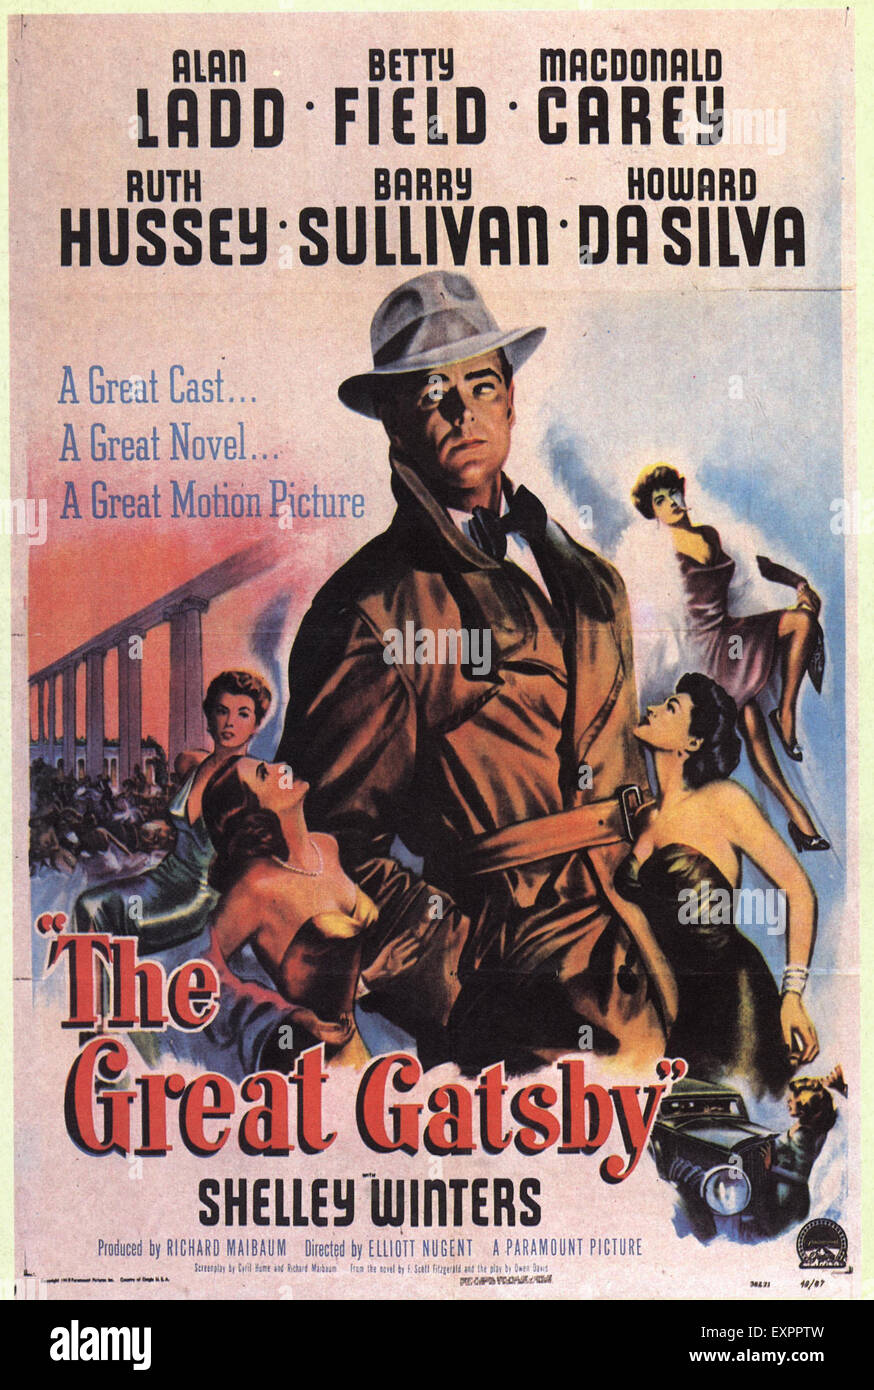 Gatsby le Magnifique » : l'Hollywood story de Fitzgerald